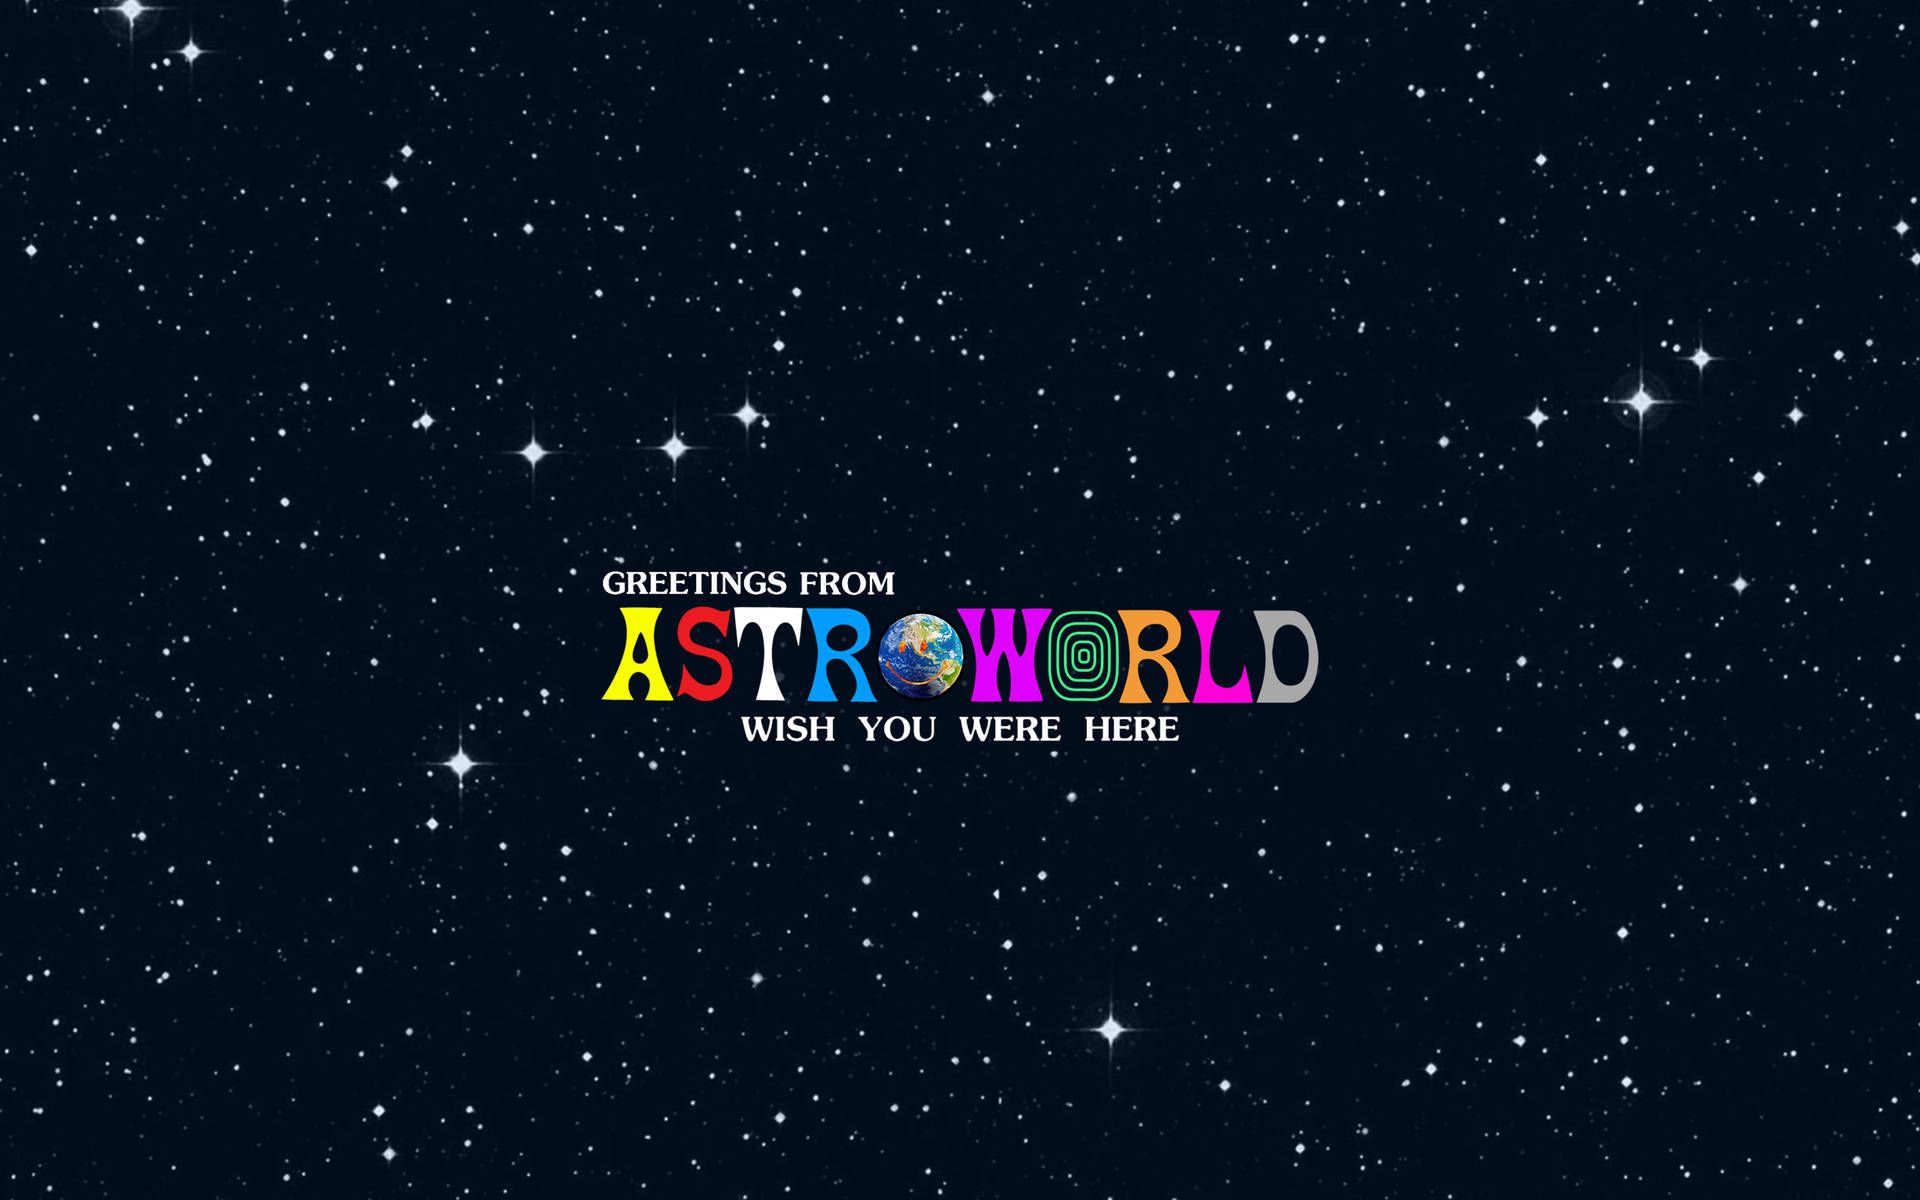 Astroworld wallpaper made by me. - Travis Scott